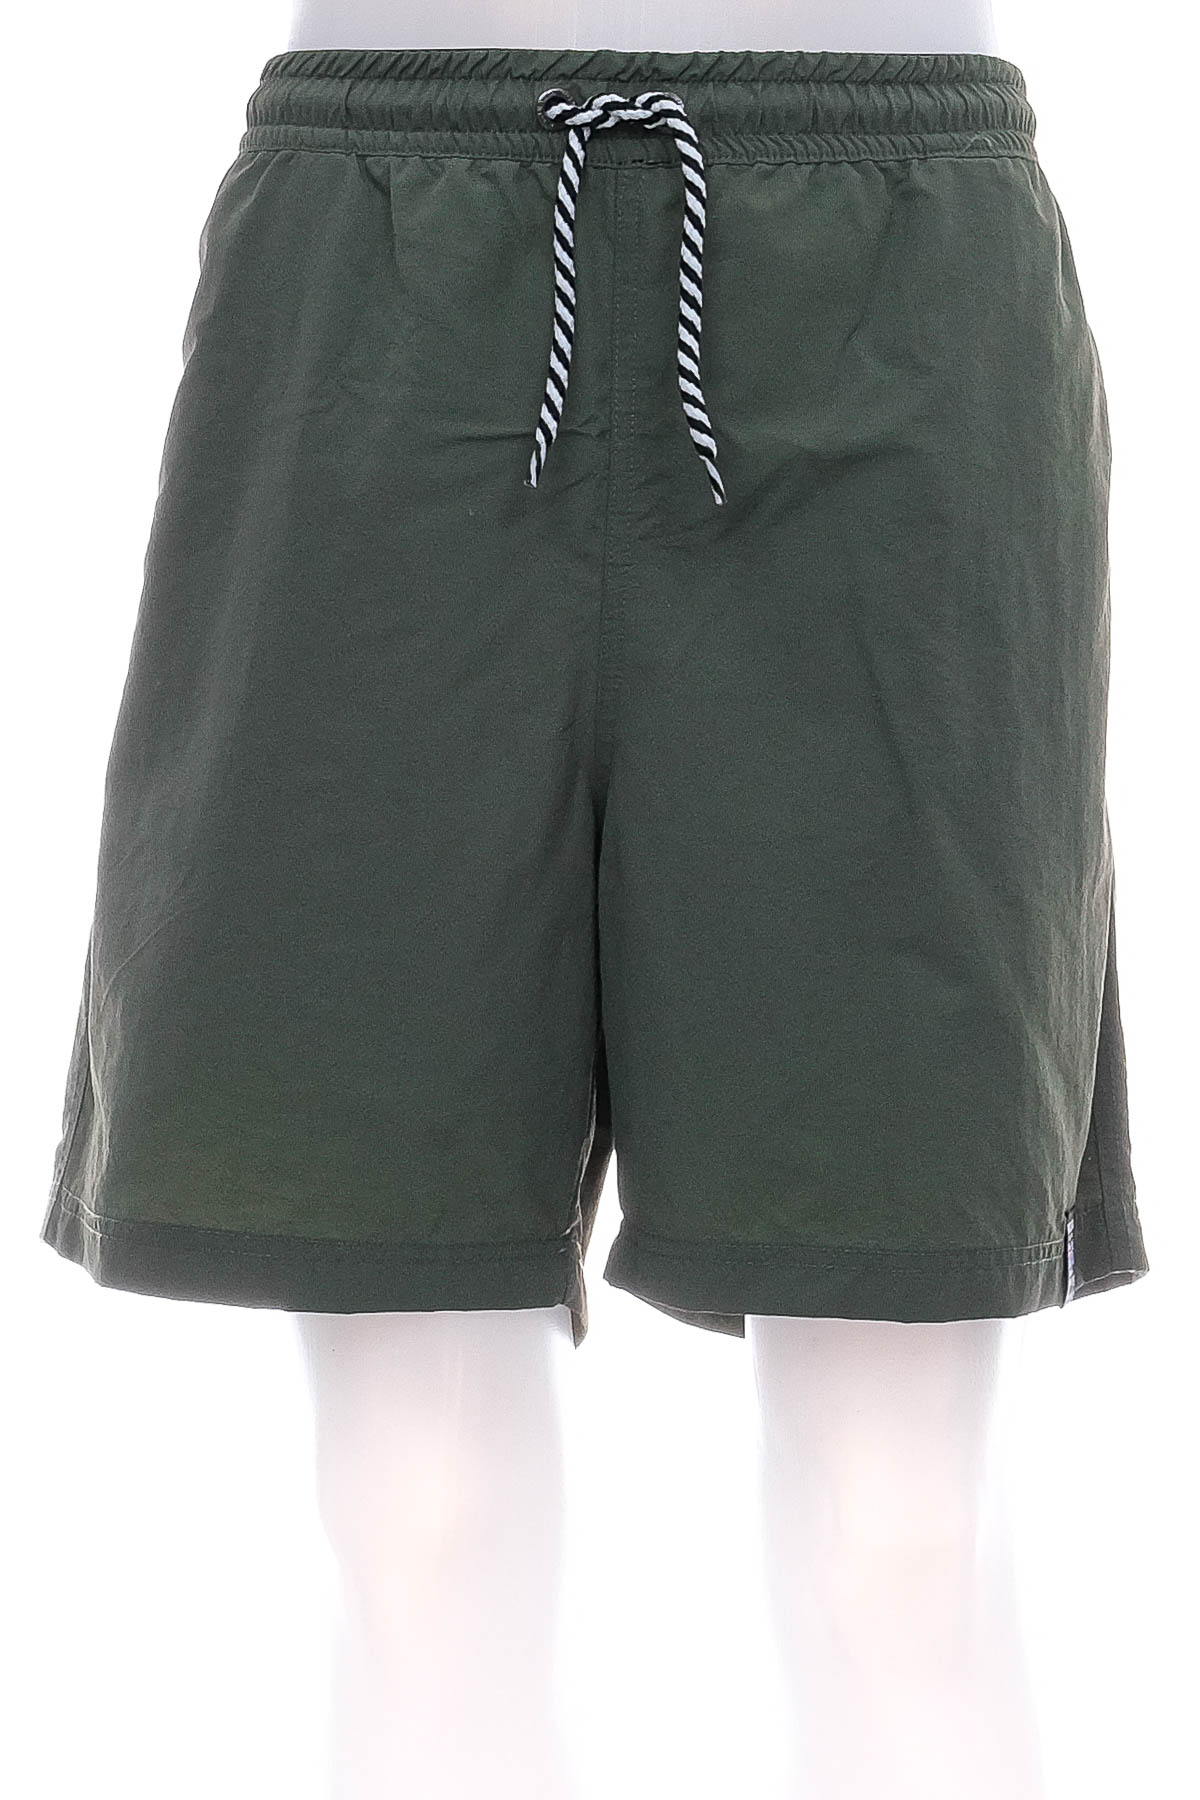 Men's shorts - Roadsign - 0